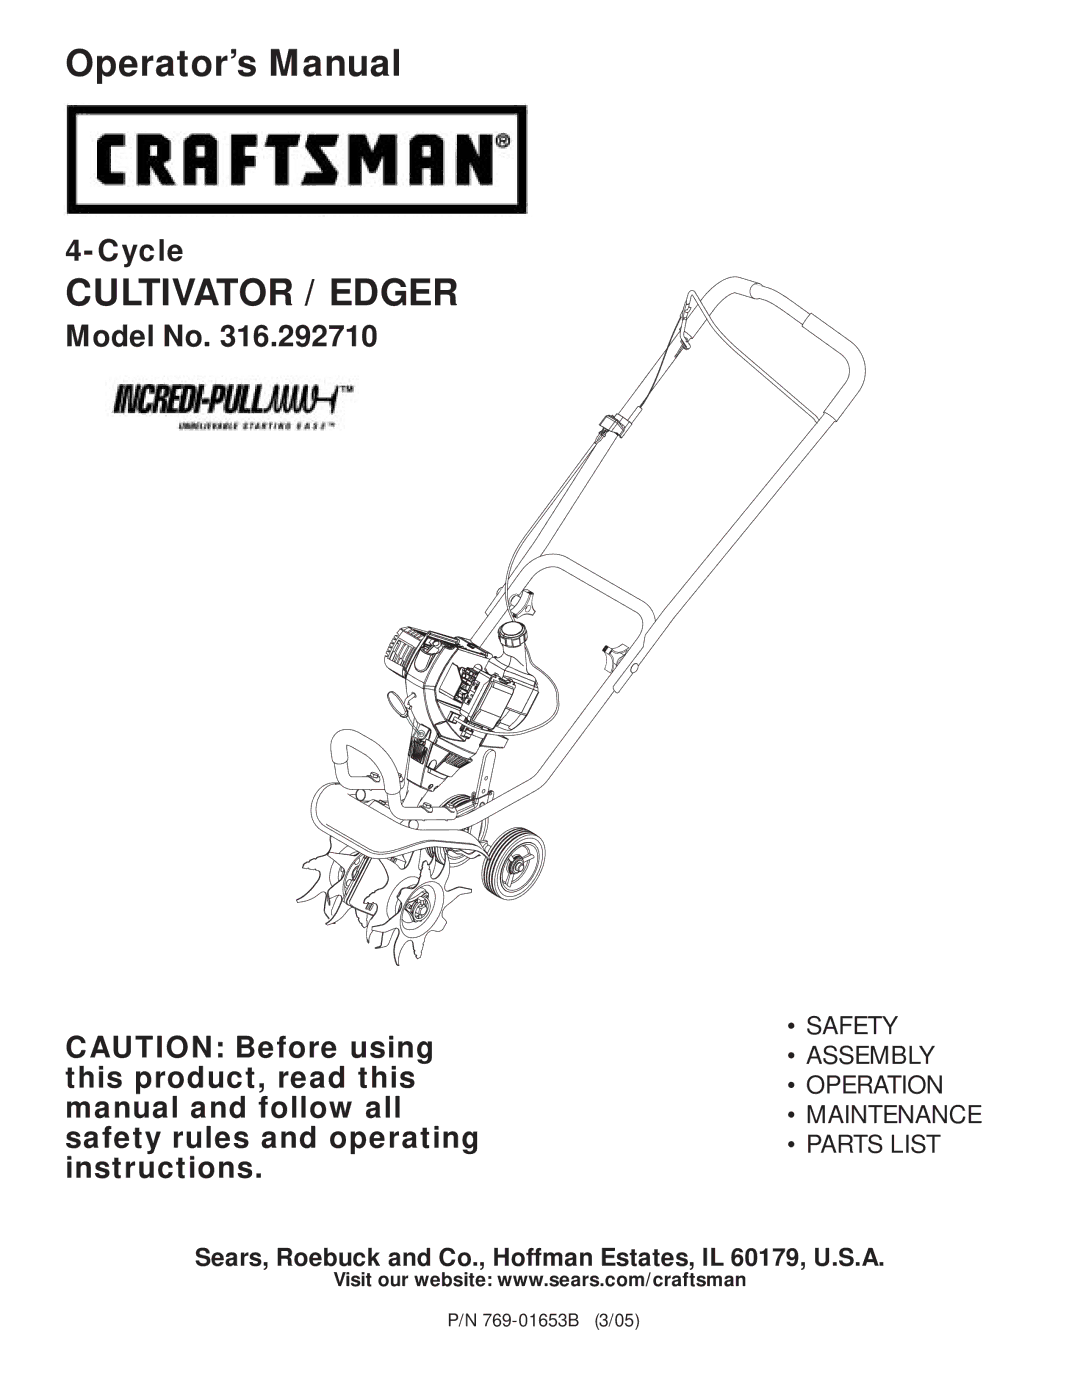 Craftsman 316.29271 manual Cultivator / Edger 